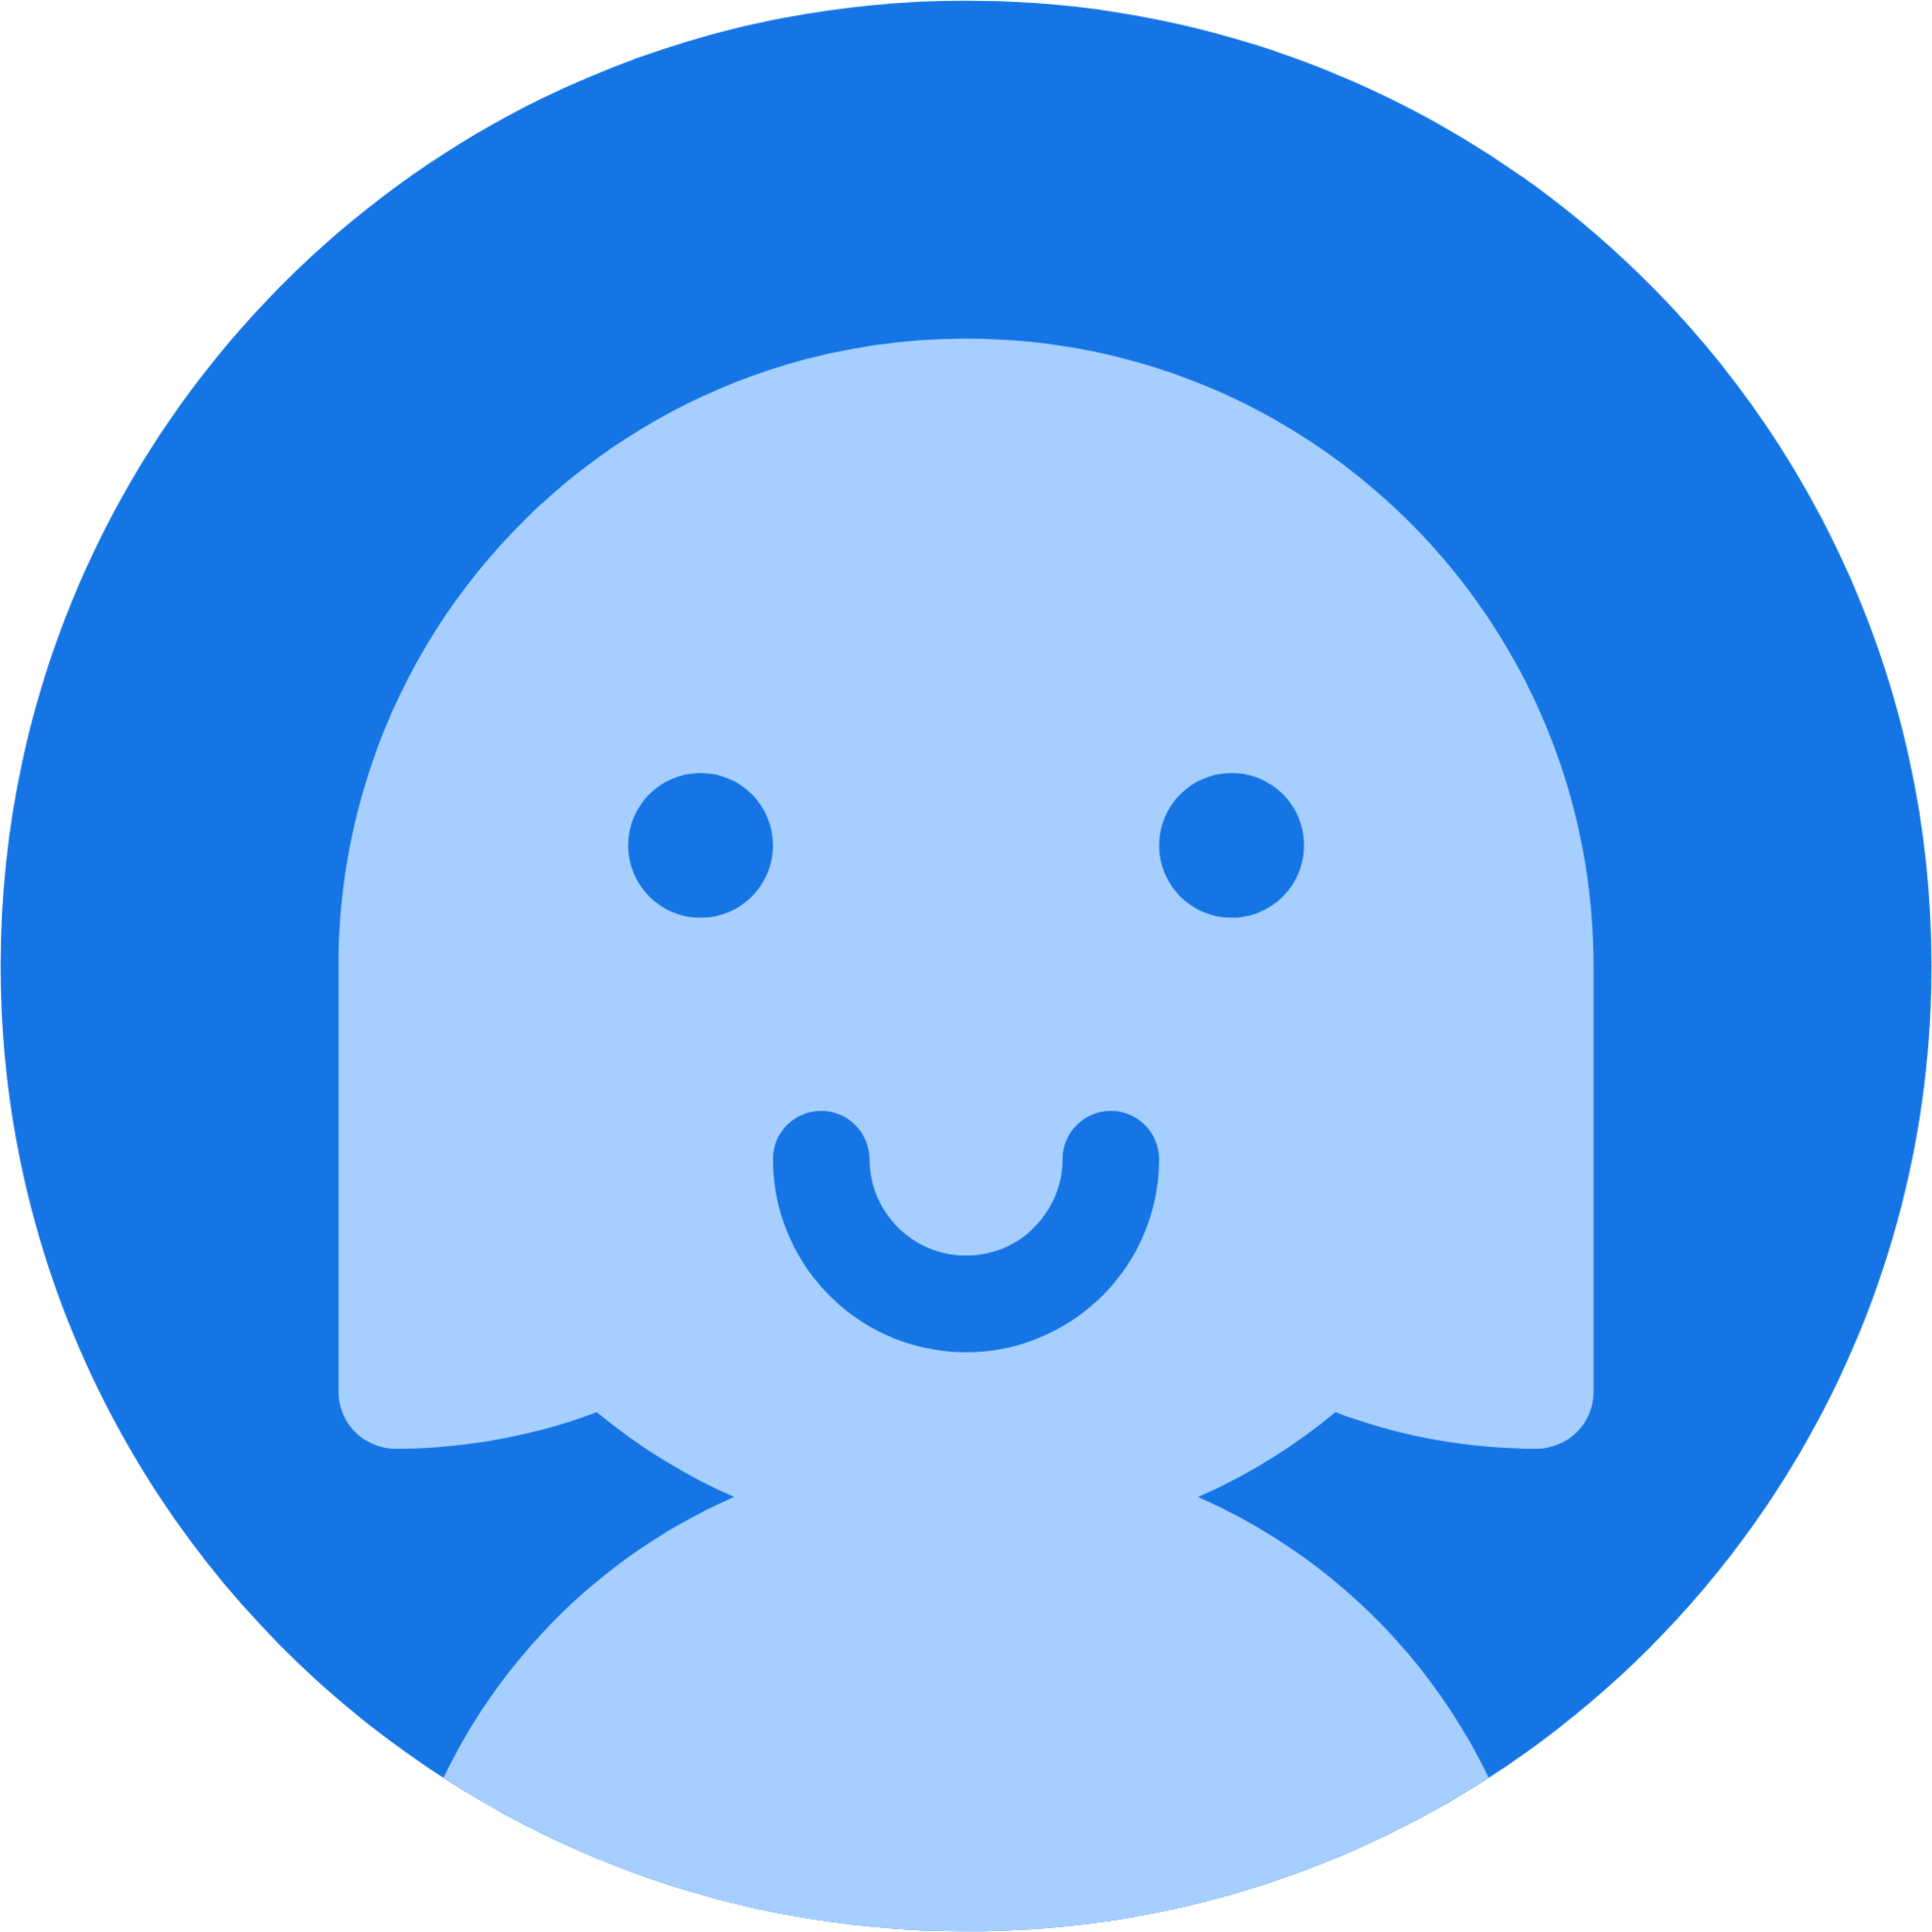 user avatar 8 icon